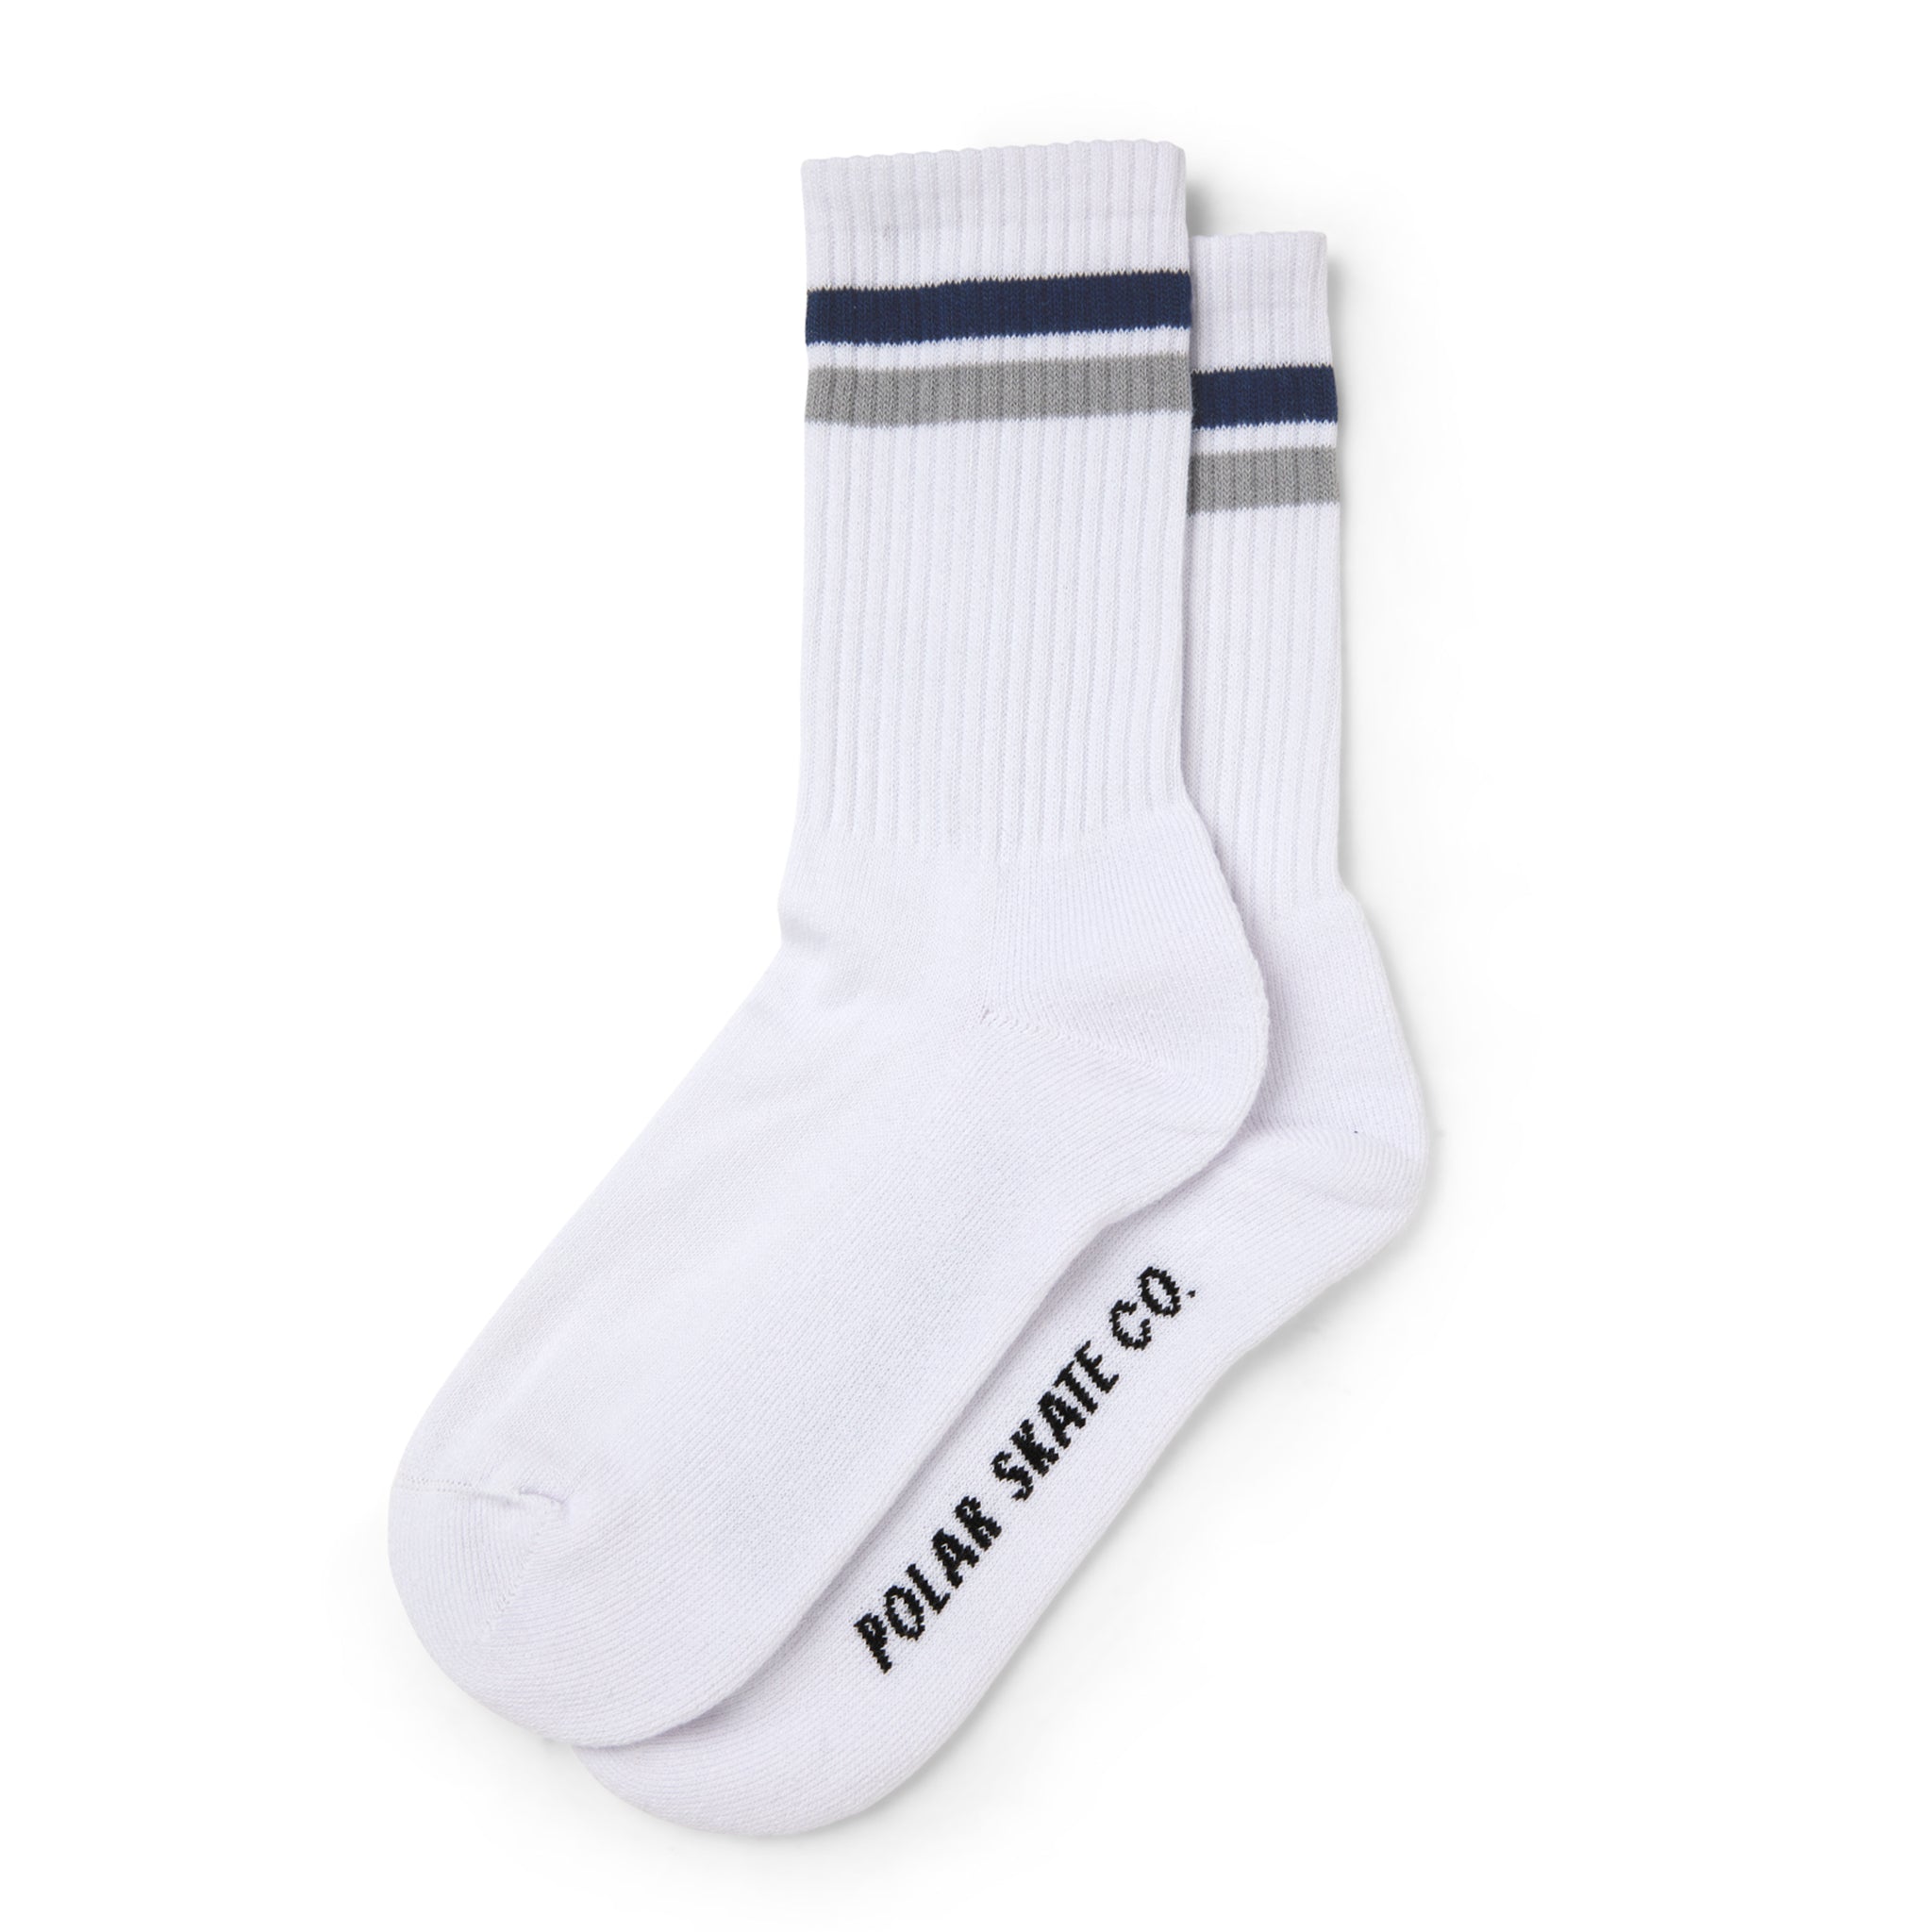 Polar Skate Co. Stripe Socks (White/Navy/Grey) - Apple Valley Emporium